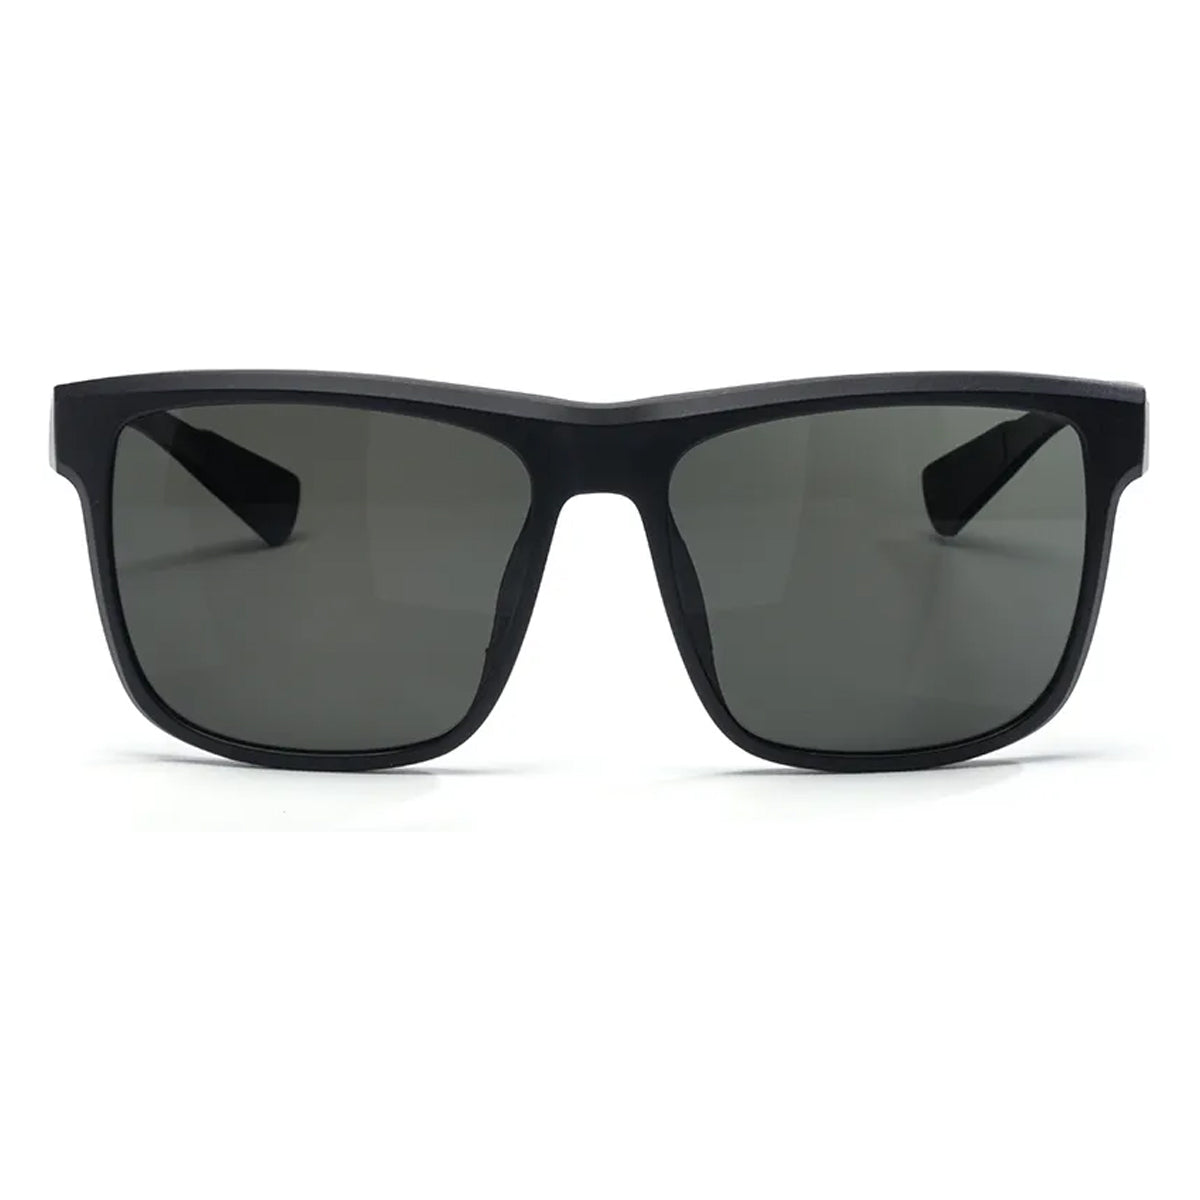 Vortex Men's Banshee Sunglasses in Black & Smoke by GOHUNT | Vortex Optics - GOHUNT Shop